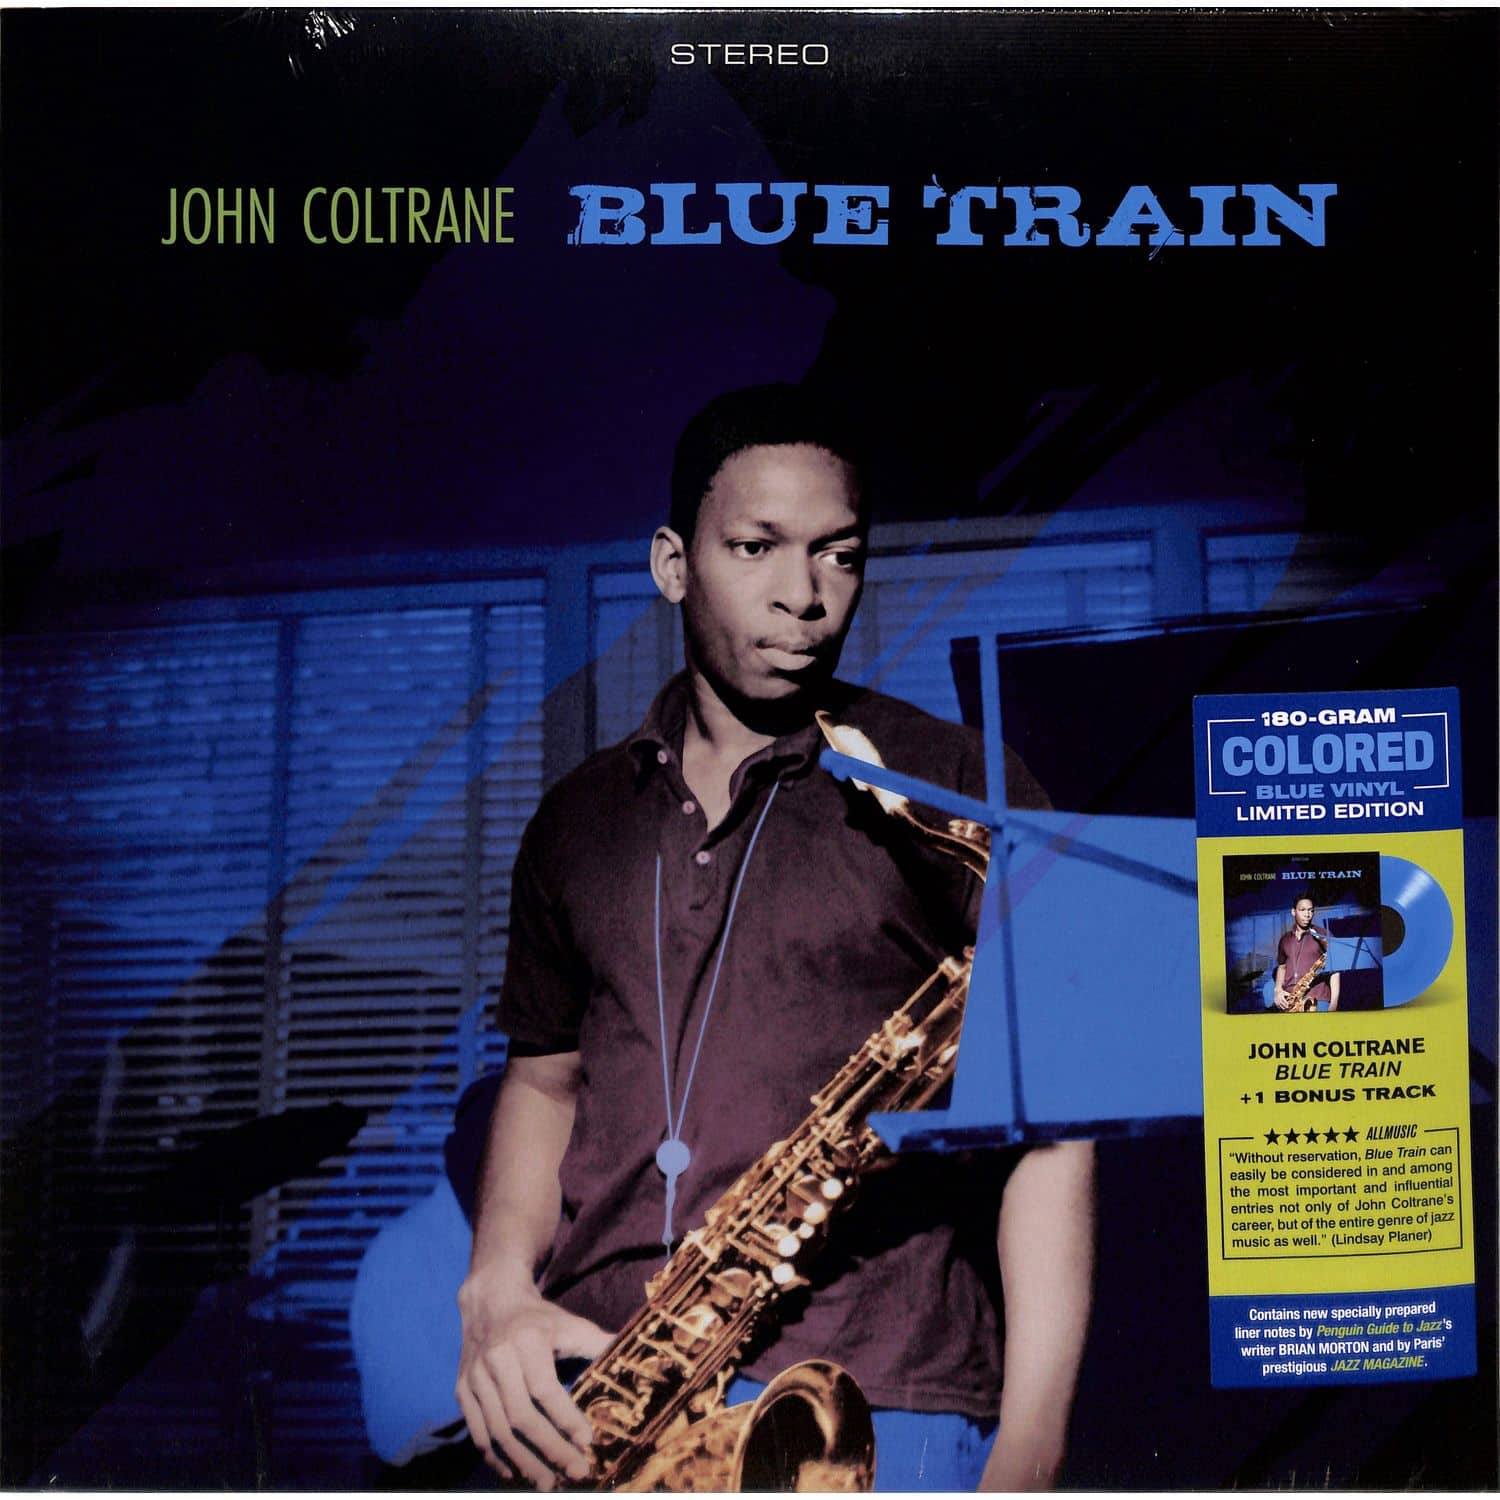 John Coltrane - BLUE TRAIN 